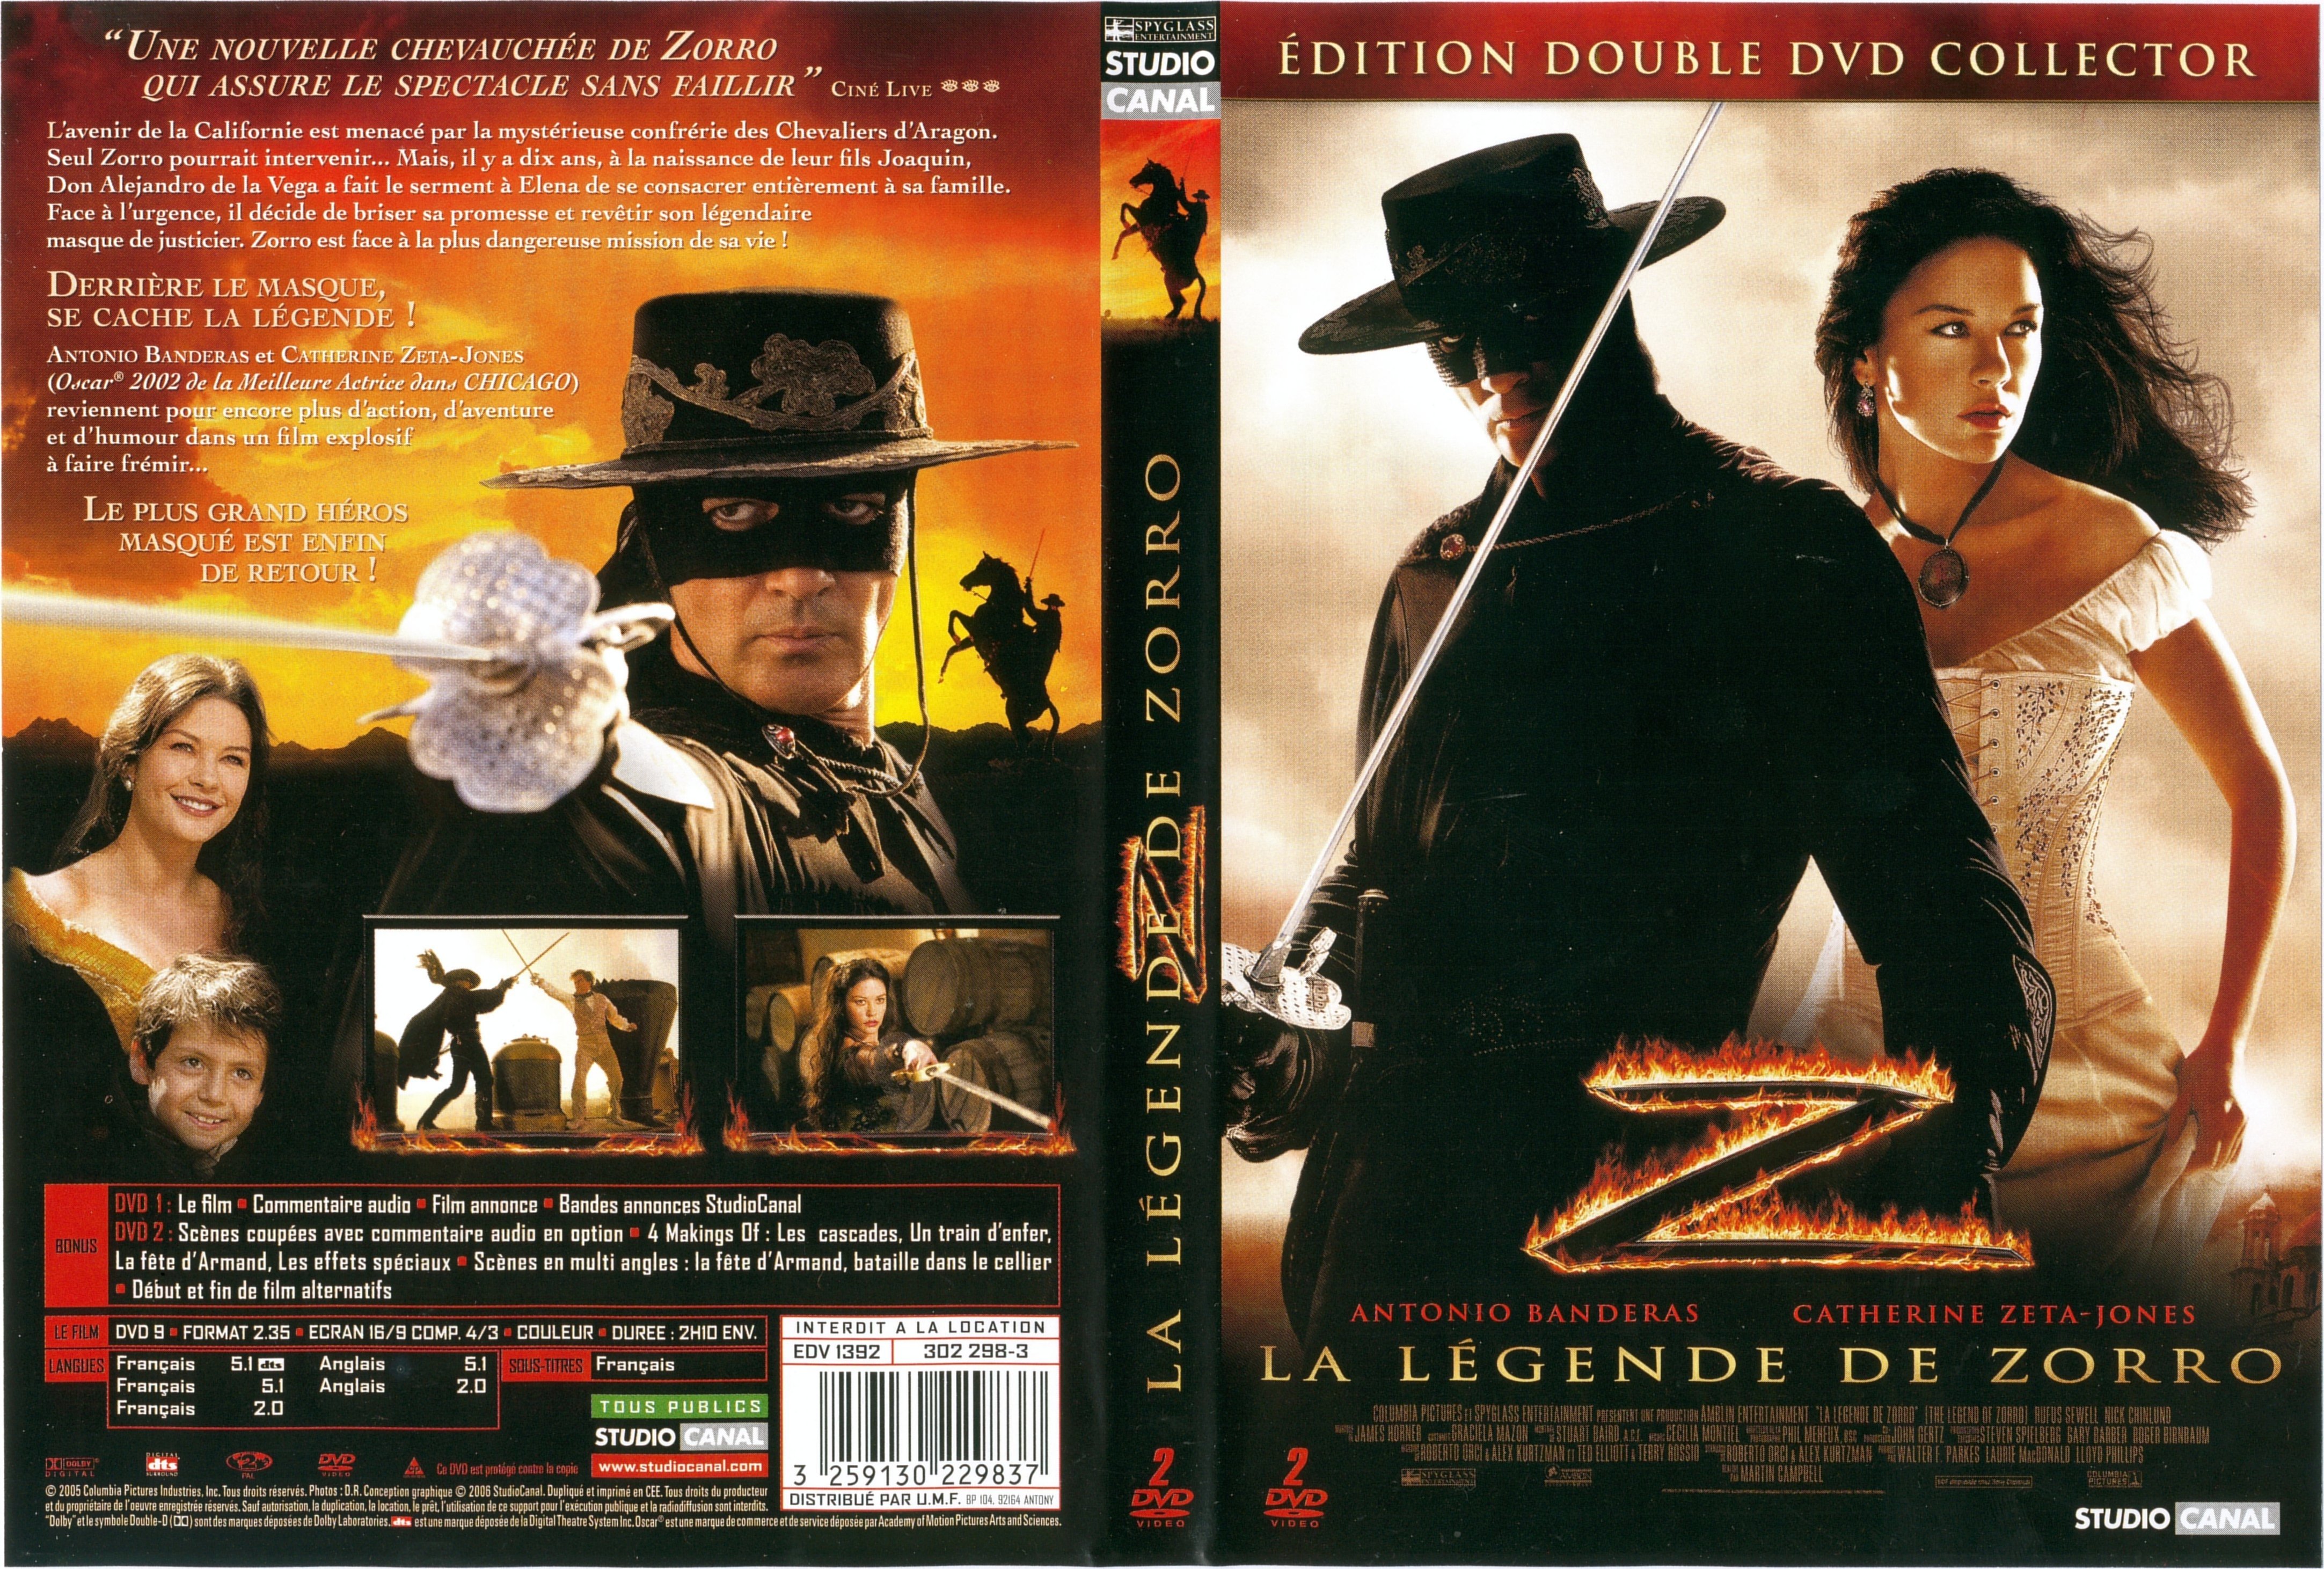 Jaquette DVD La lgende de Zorro v2